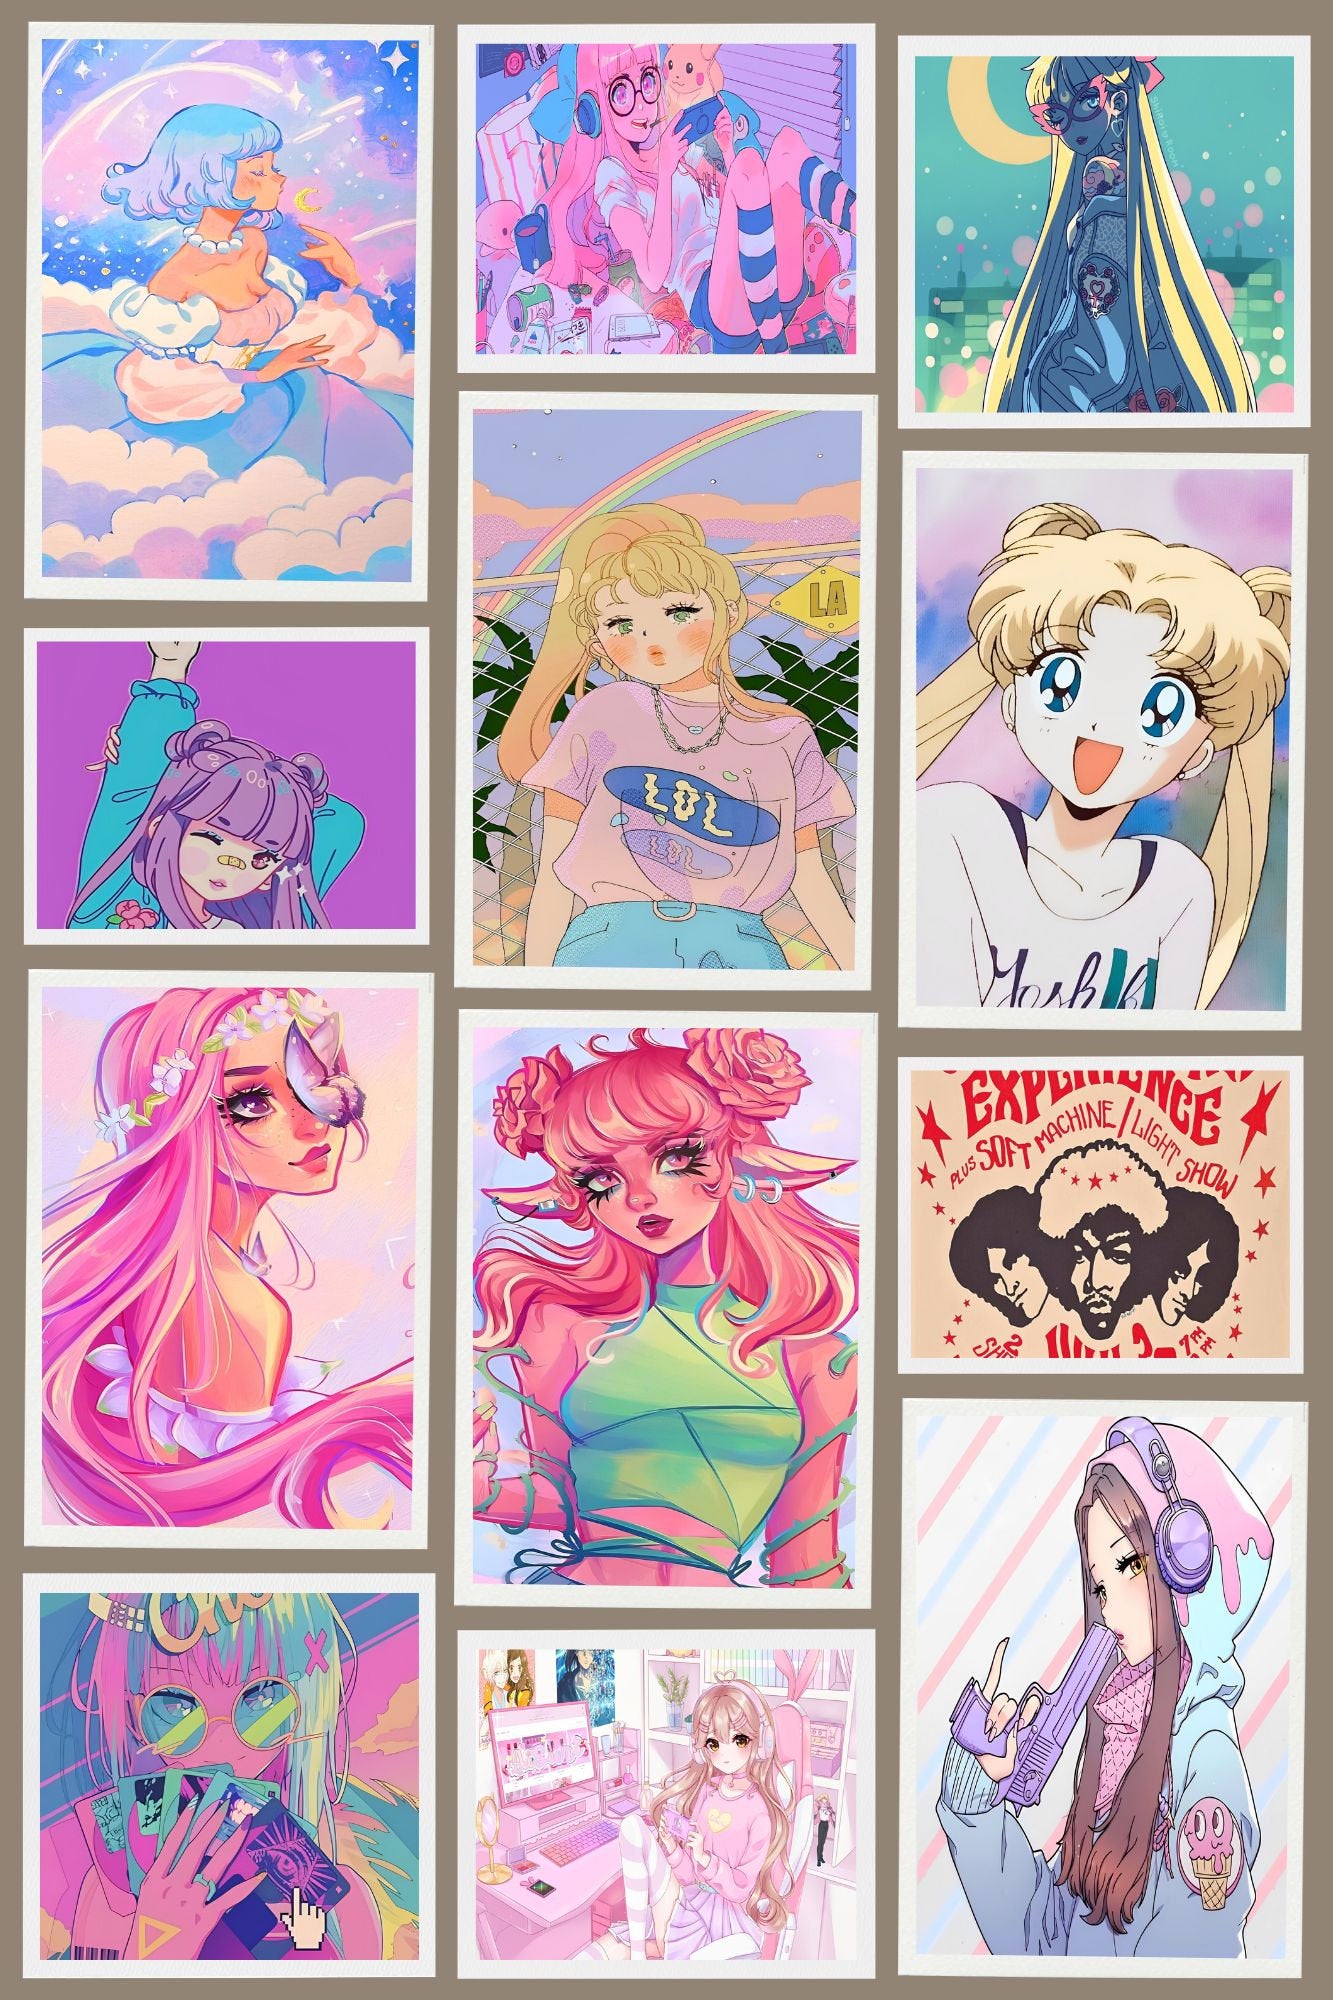 200 PCS Gamer Girl Collage Kit INSTANT DONWLOAD, kawaii gamer girl, danish pastel wall prints, gamer girl decor, anime, kawaii wall decor